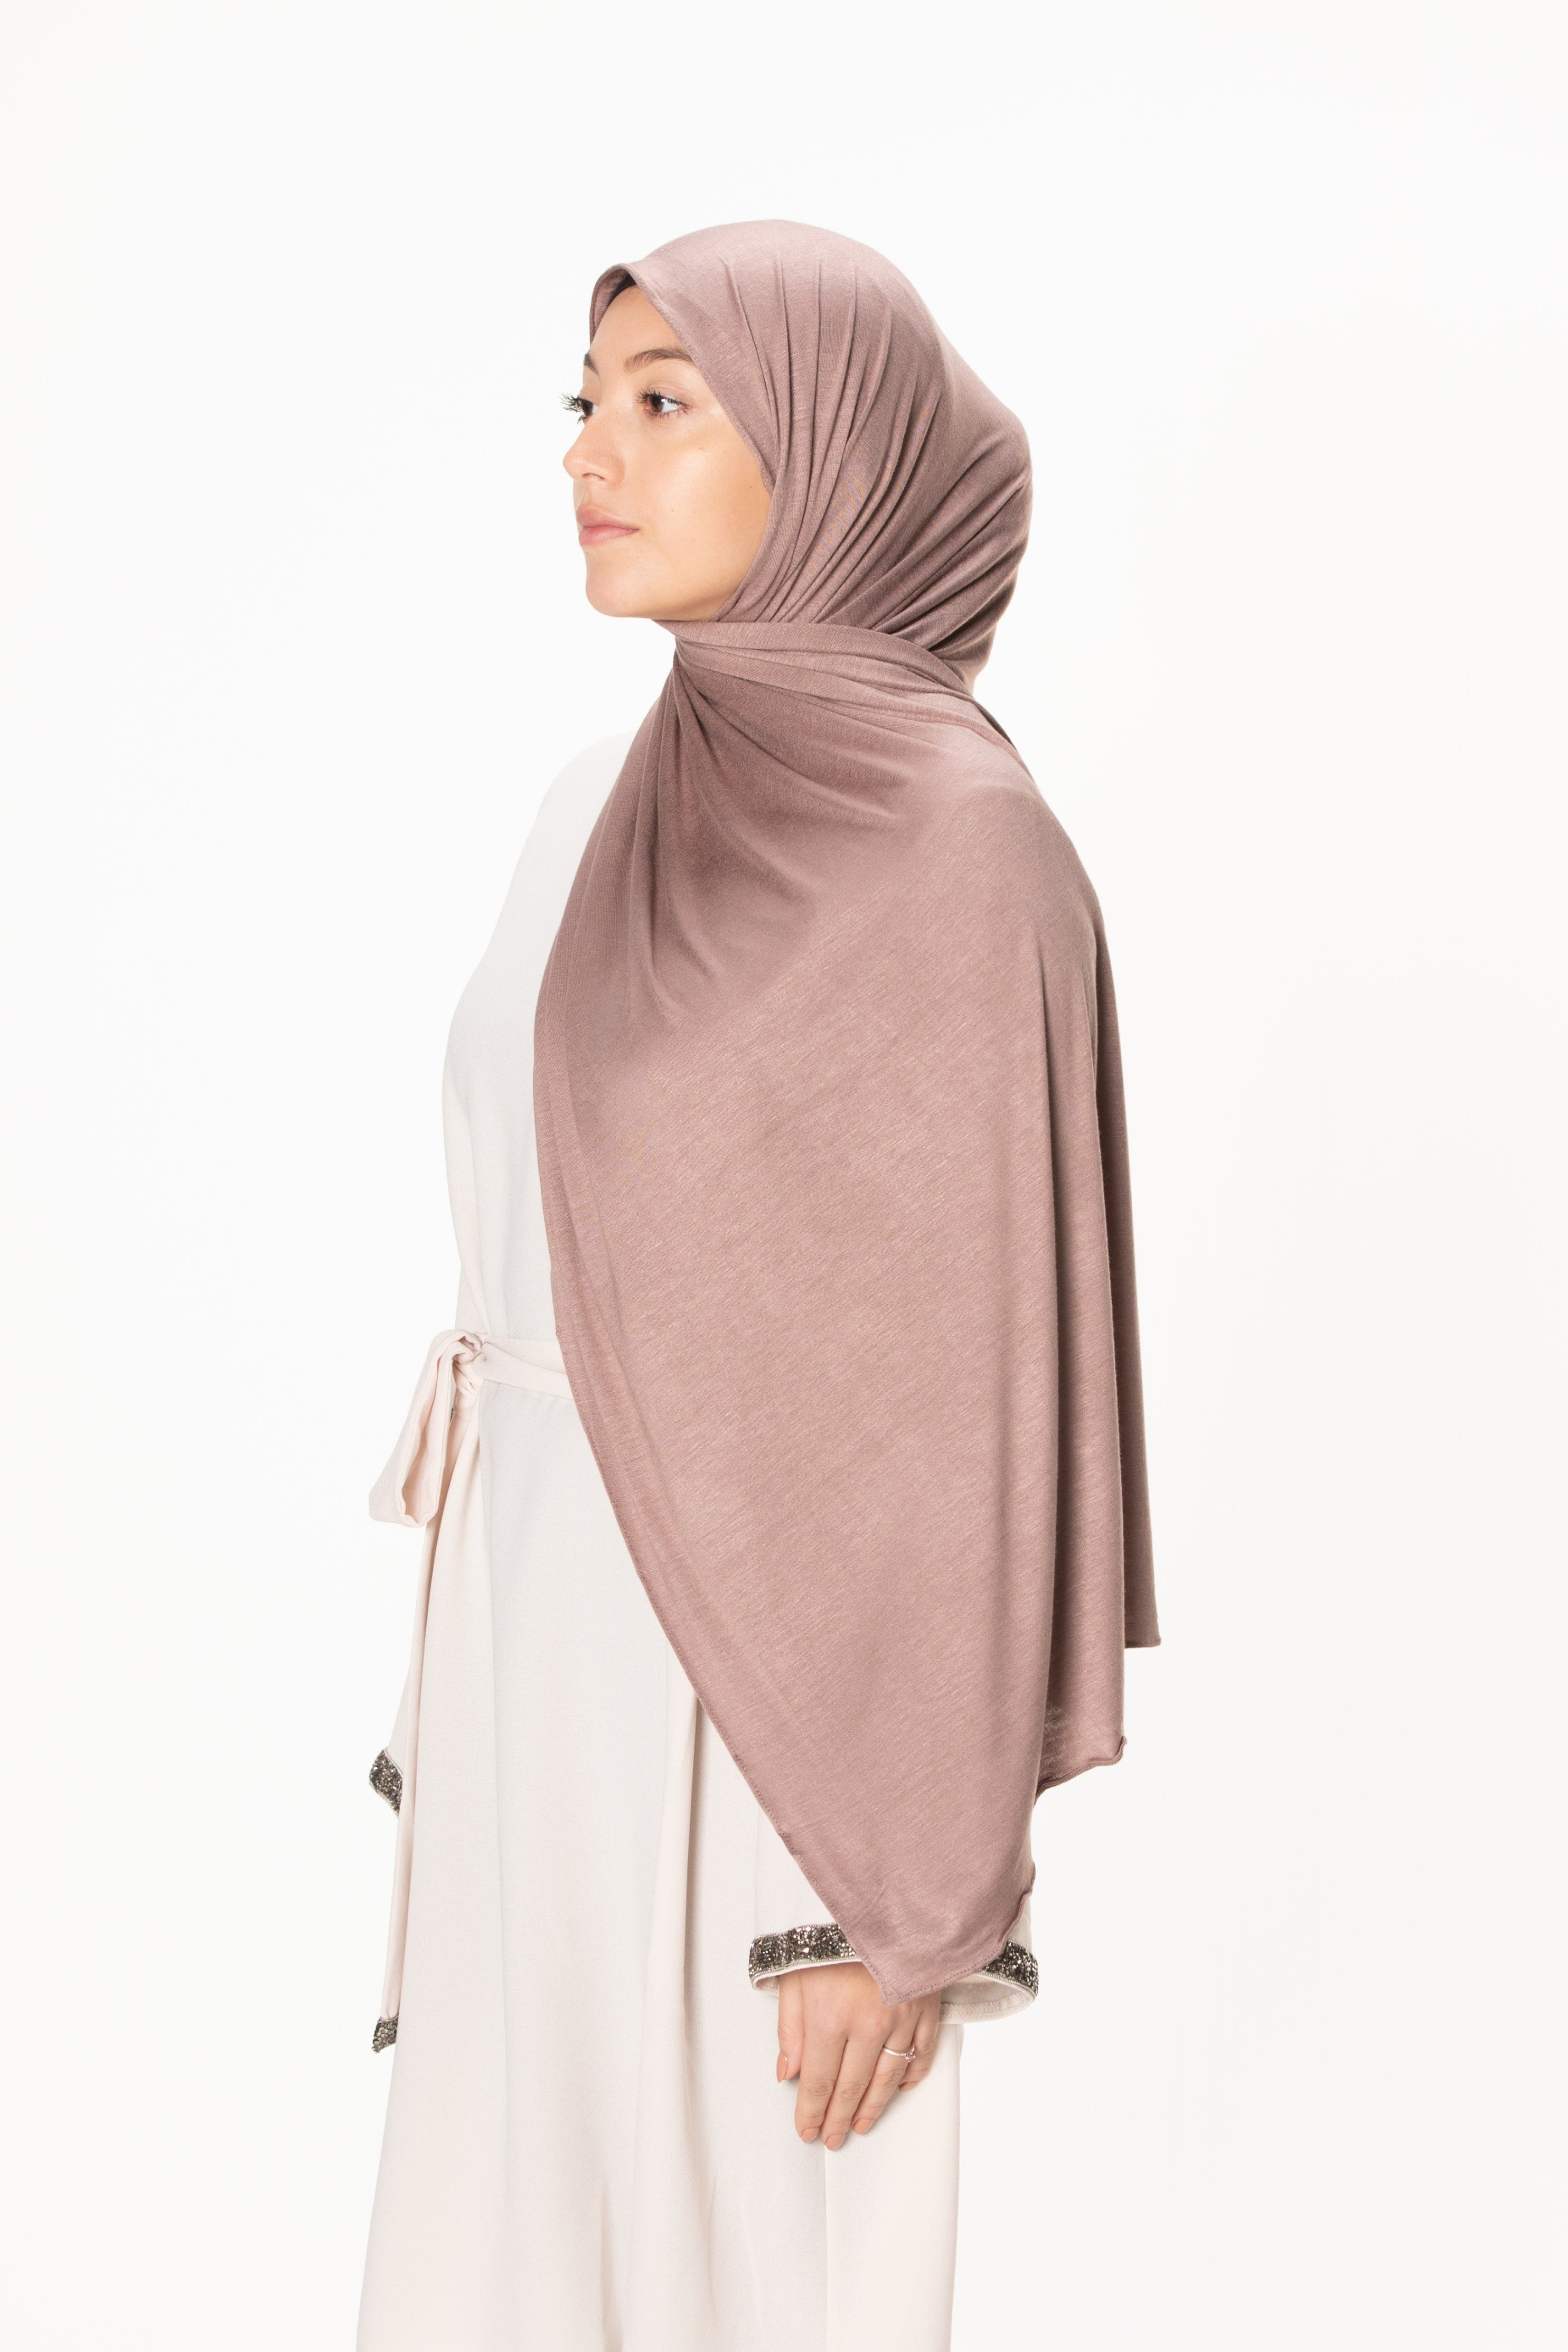 jolienisa Plum Taupe Jersey Cotton Hijab